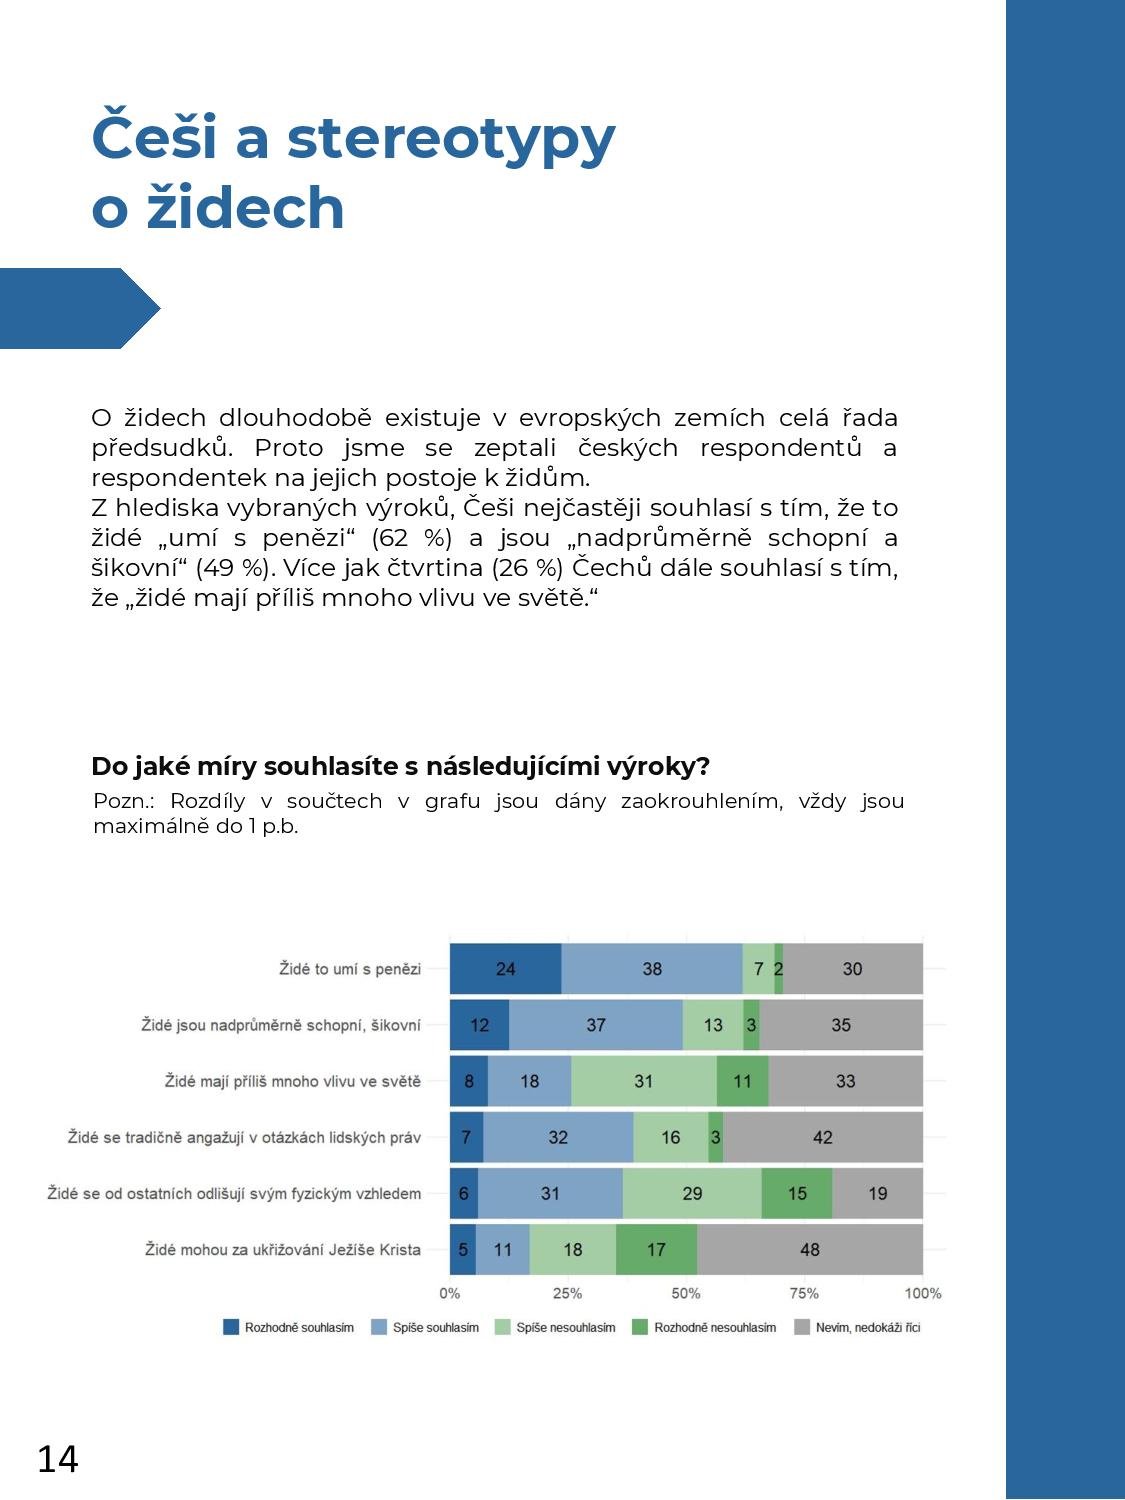 HCIS_PRCP_Public attitudes towards Israel_REPORT_CZ_Finální (2)-page-014.jpg